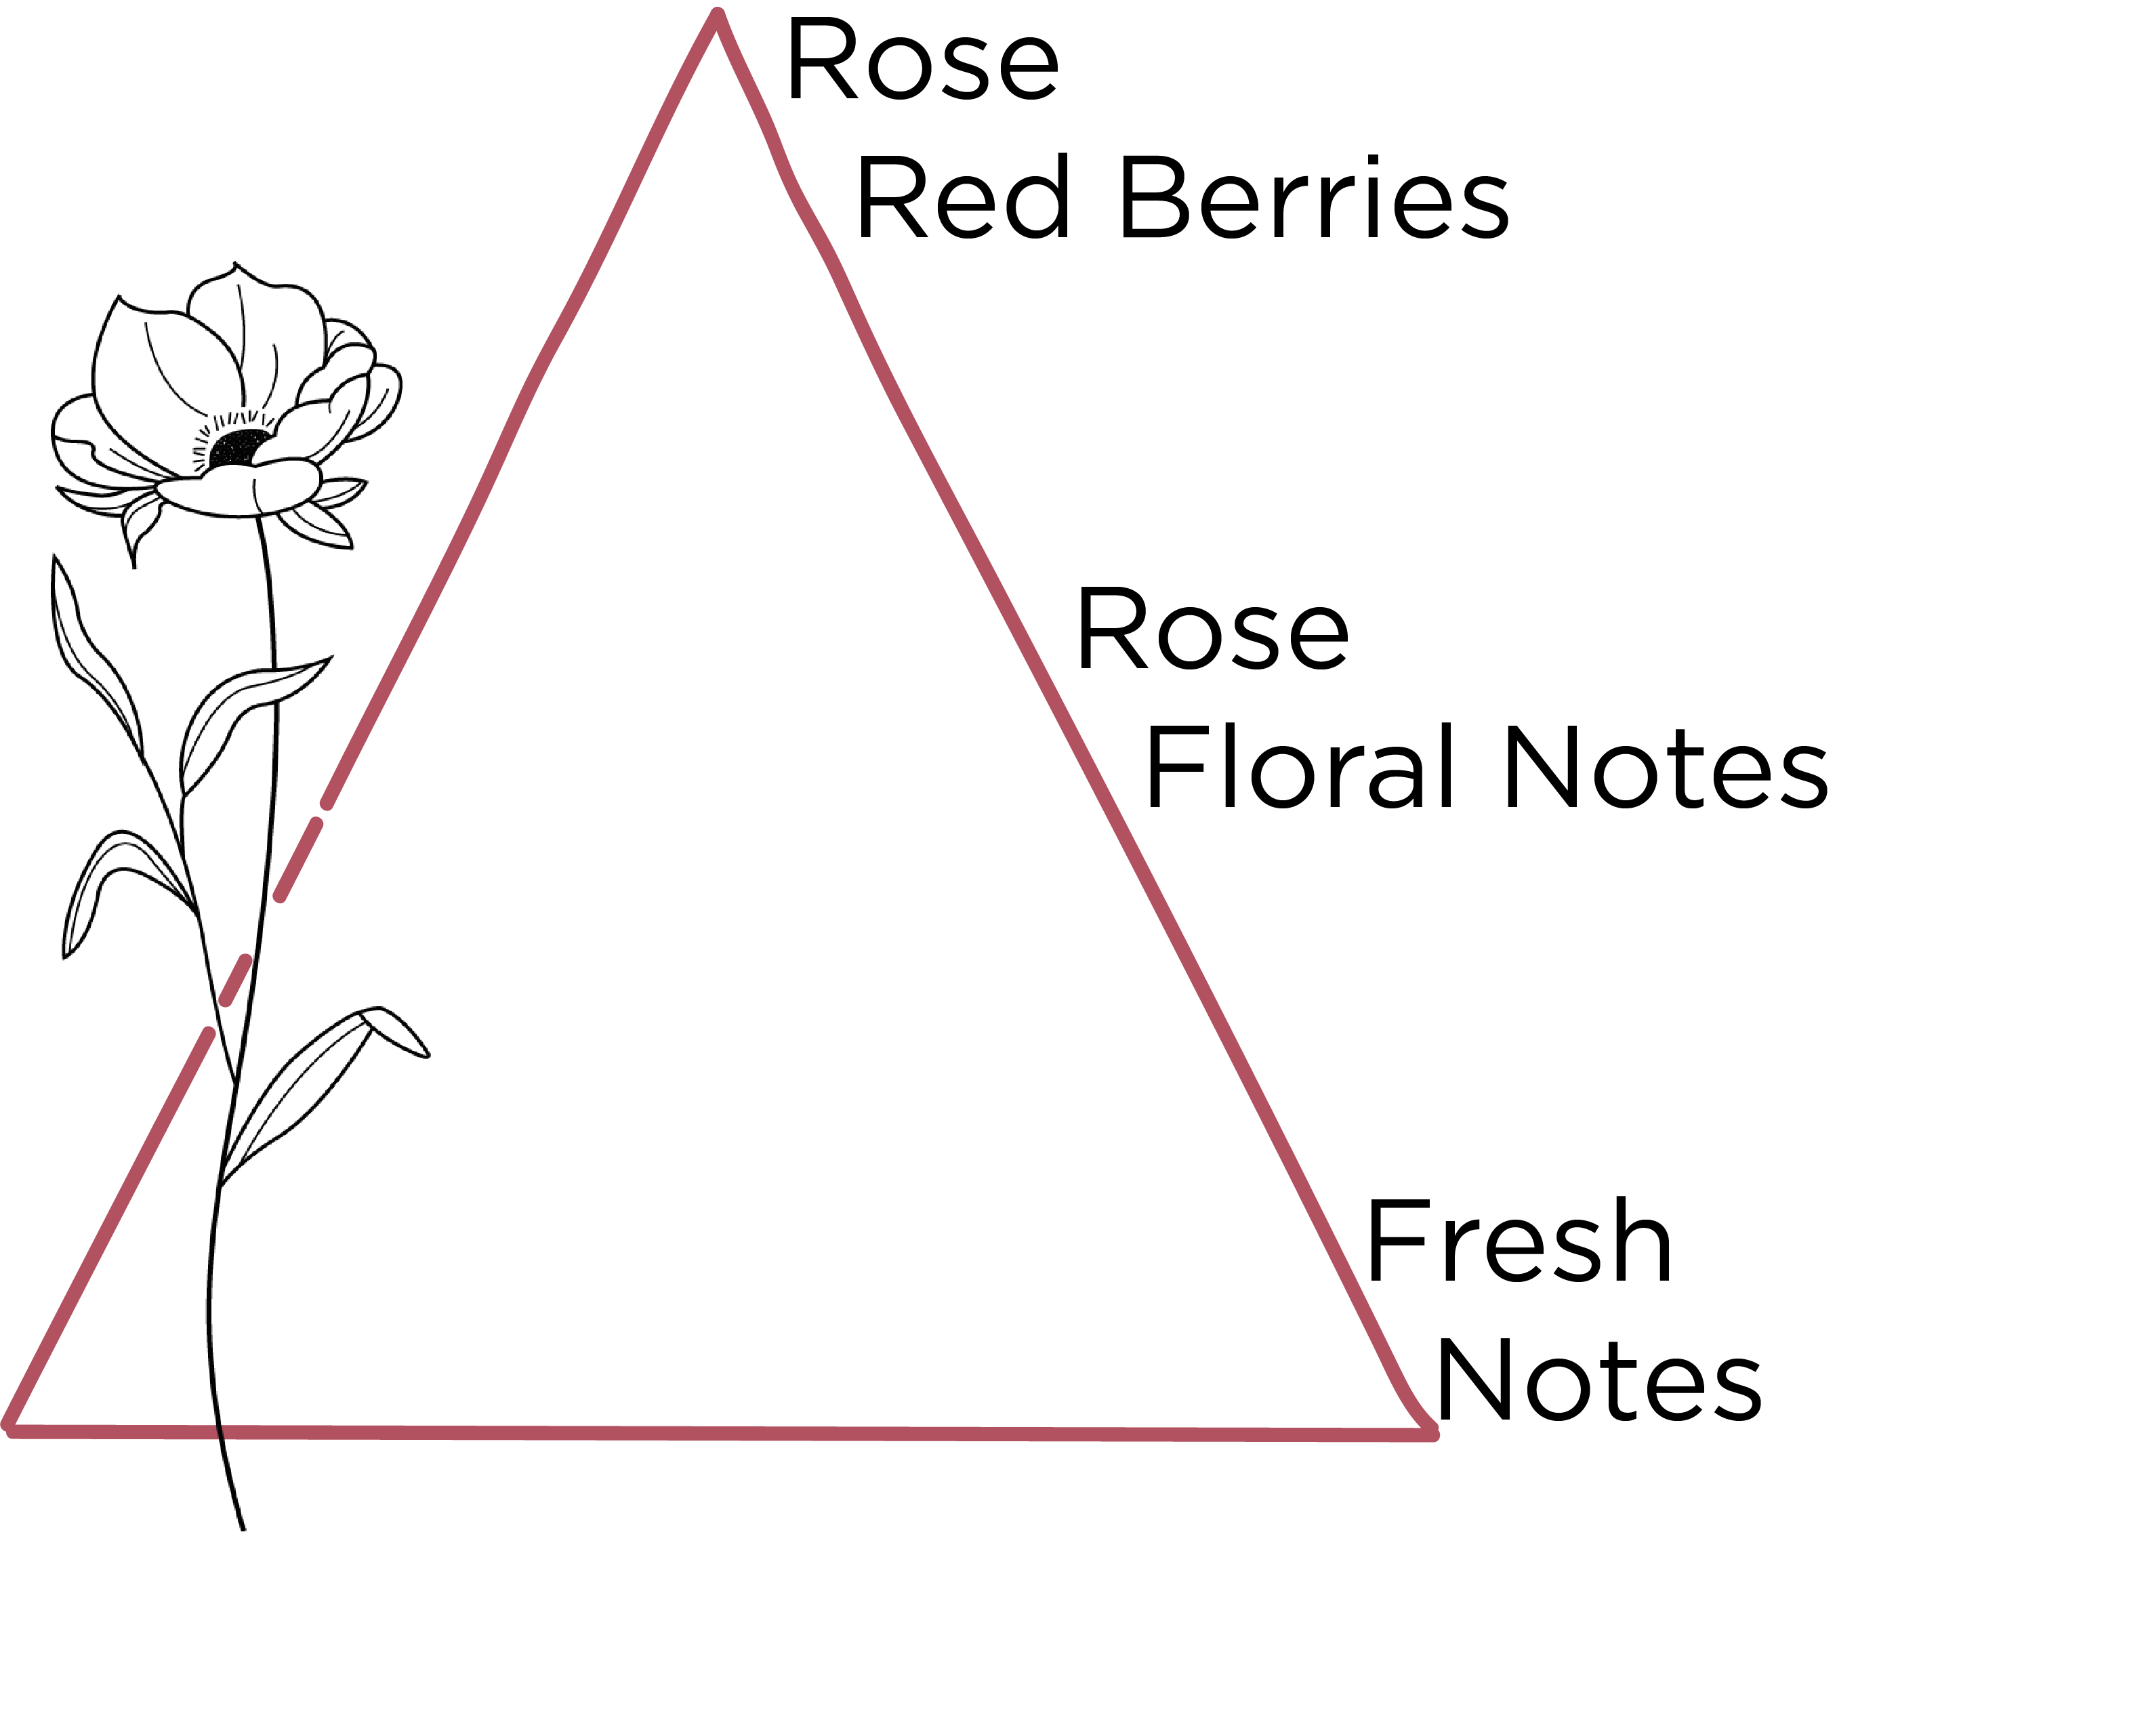 pyramide olfactive rose en.png